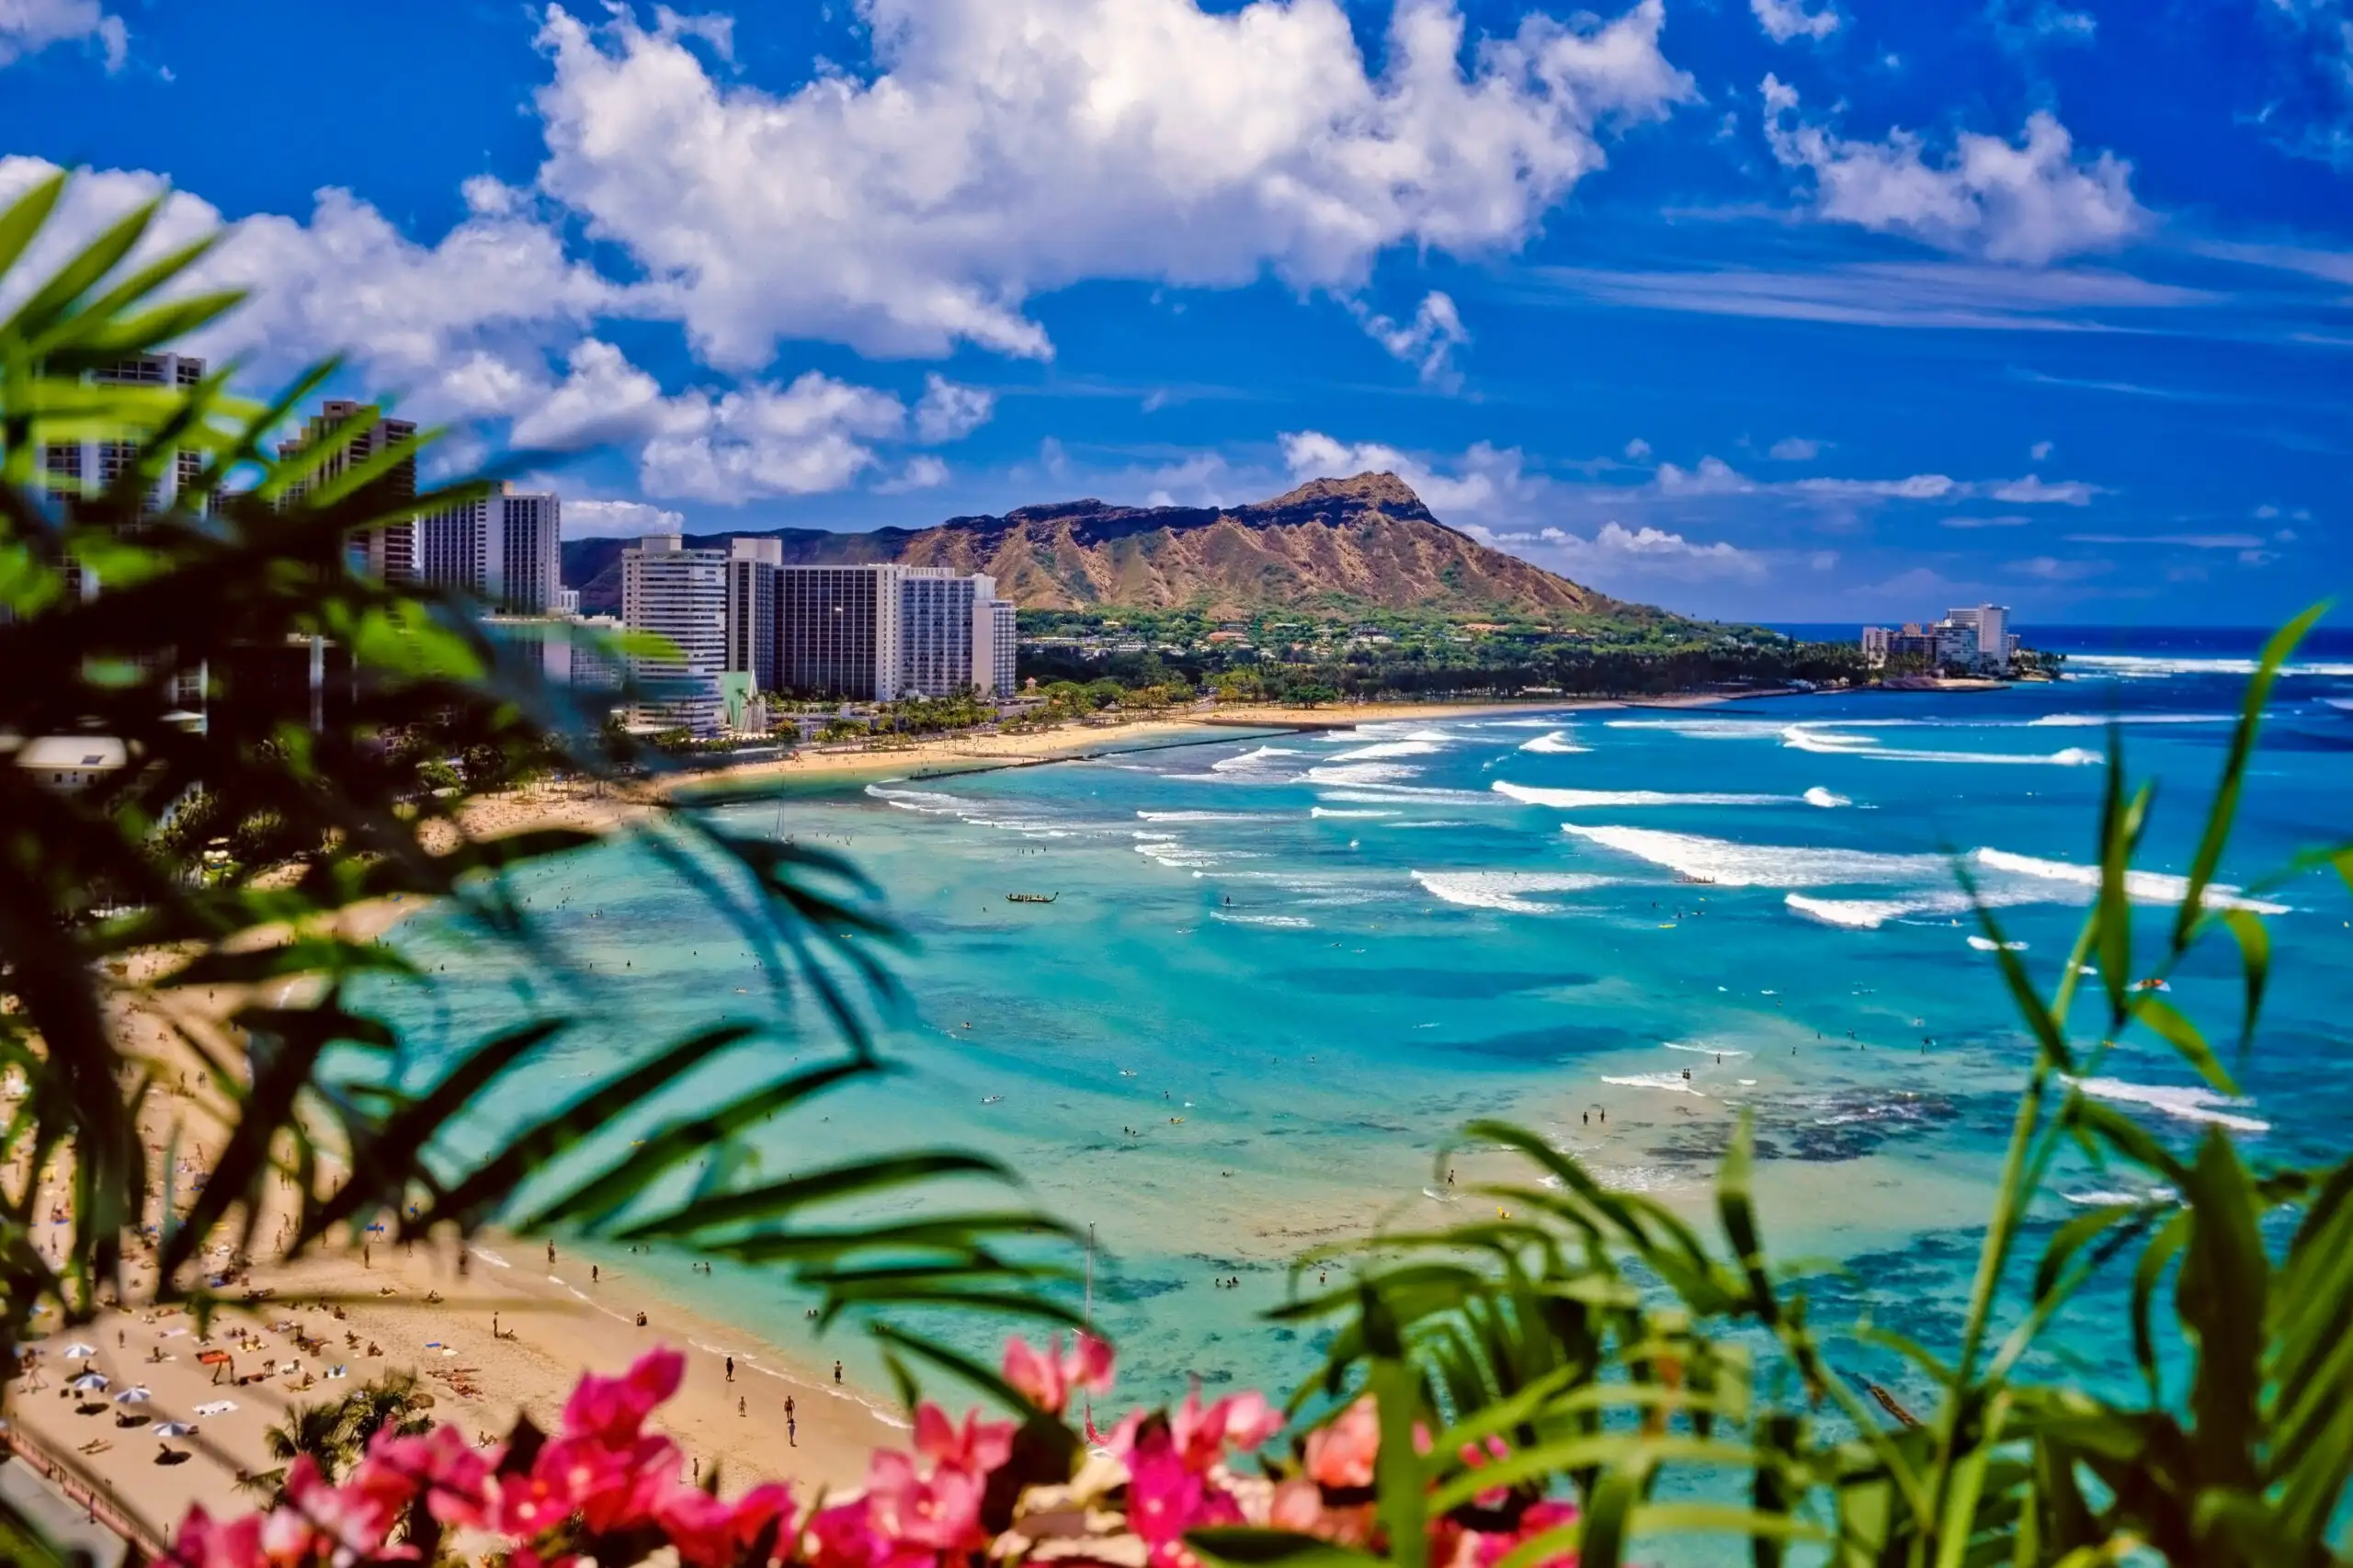 Waikiki Beach and Diamond Head in Hawaii as seen from a distance